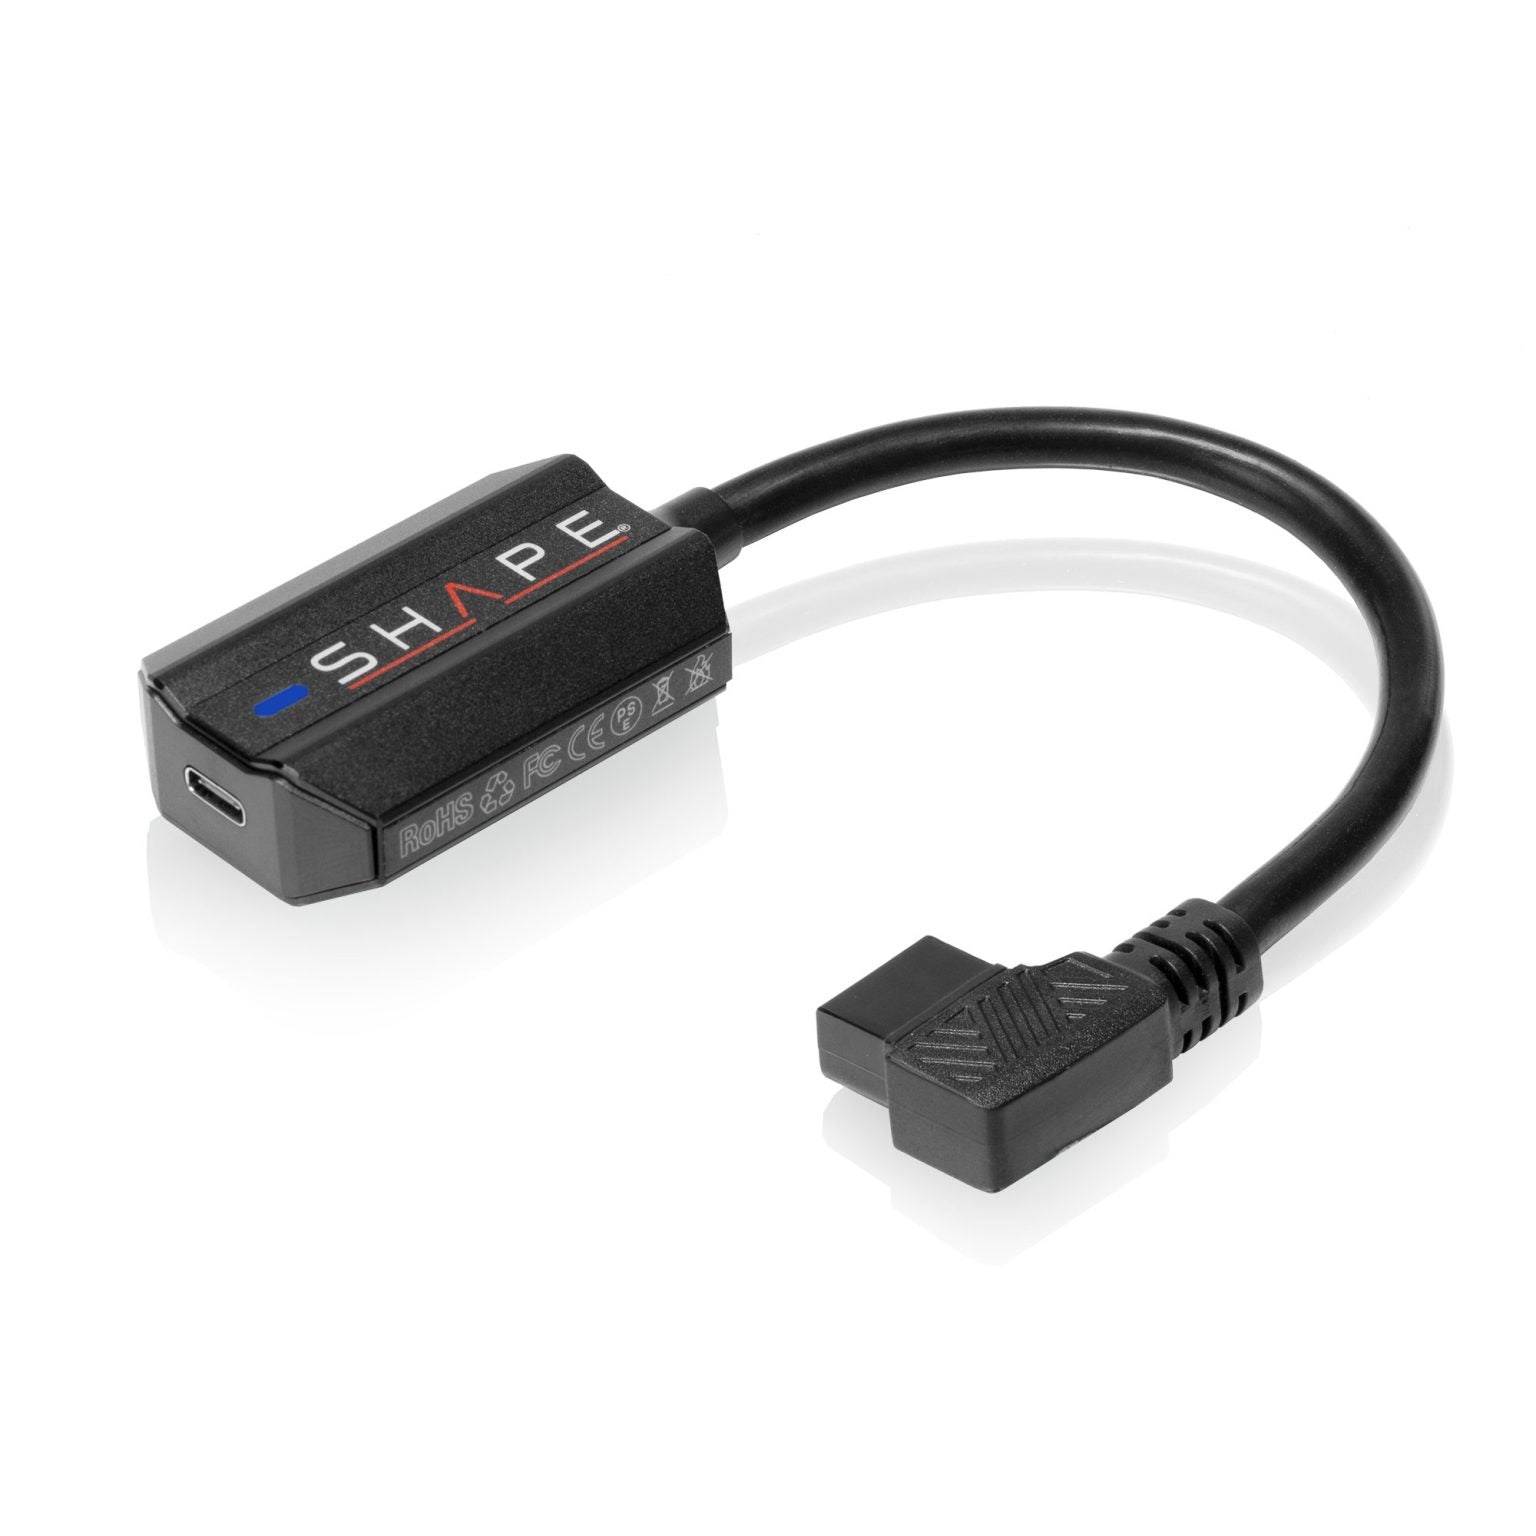 SHAPE D-Tap to USB-C Bi-Directional Charging Adapter 100W